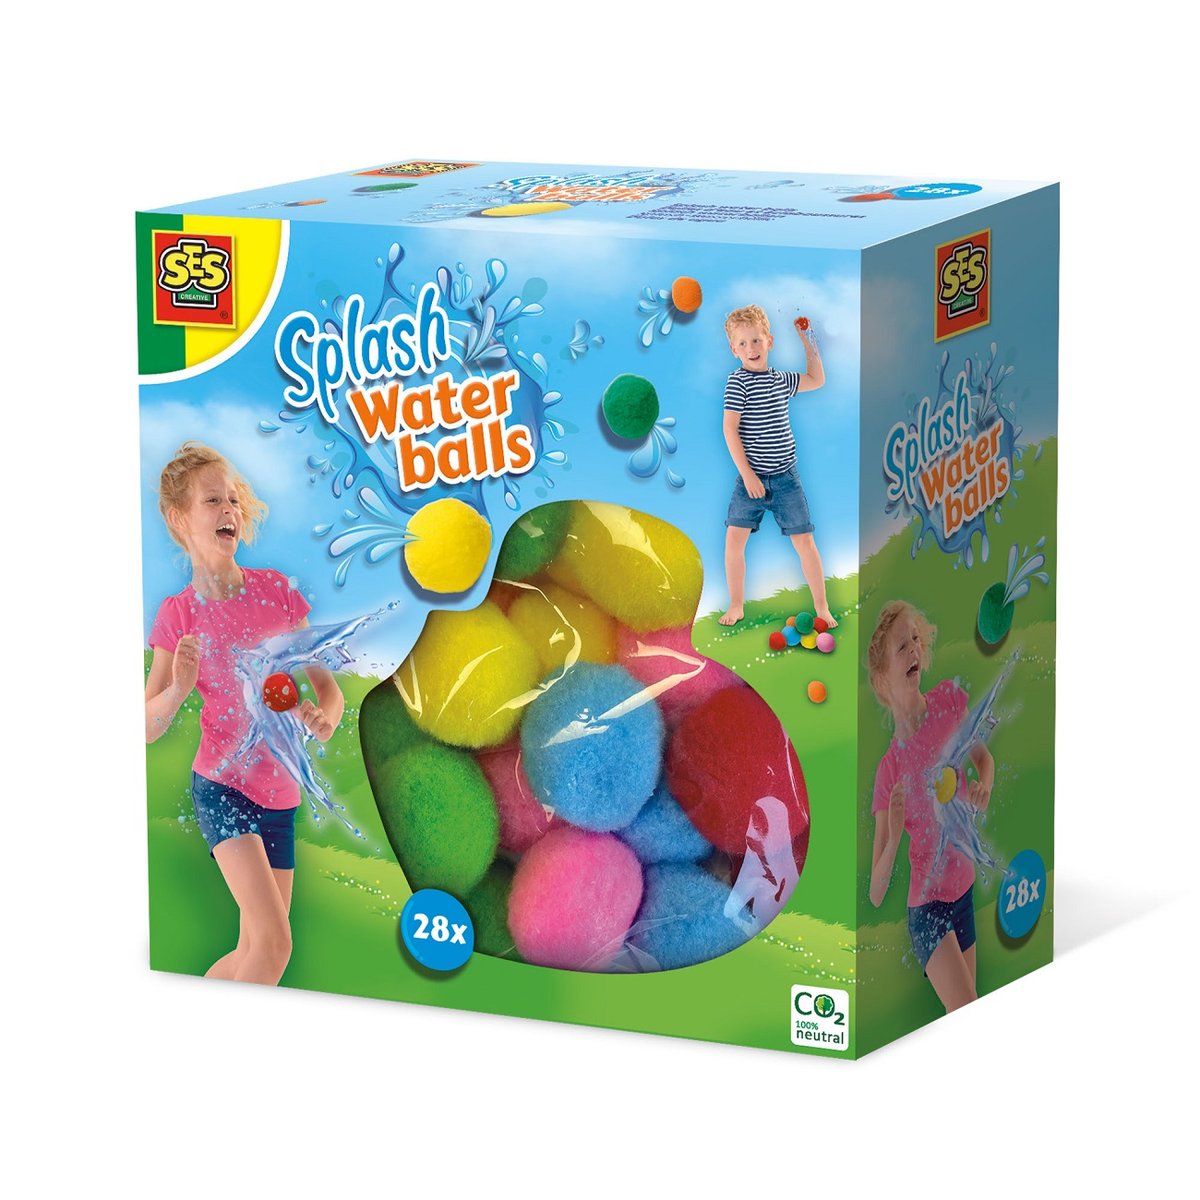 Splash water balls - Rozpryskuj kule wodne 28szt.